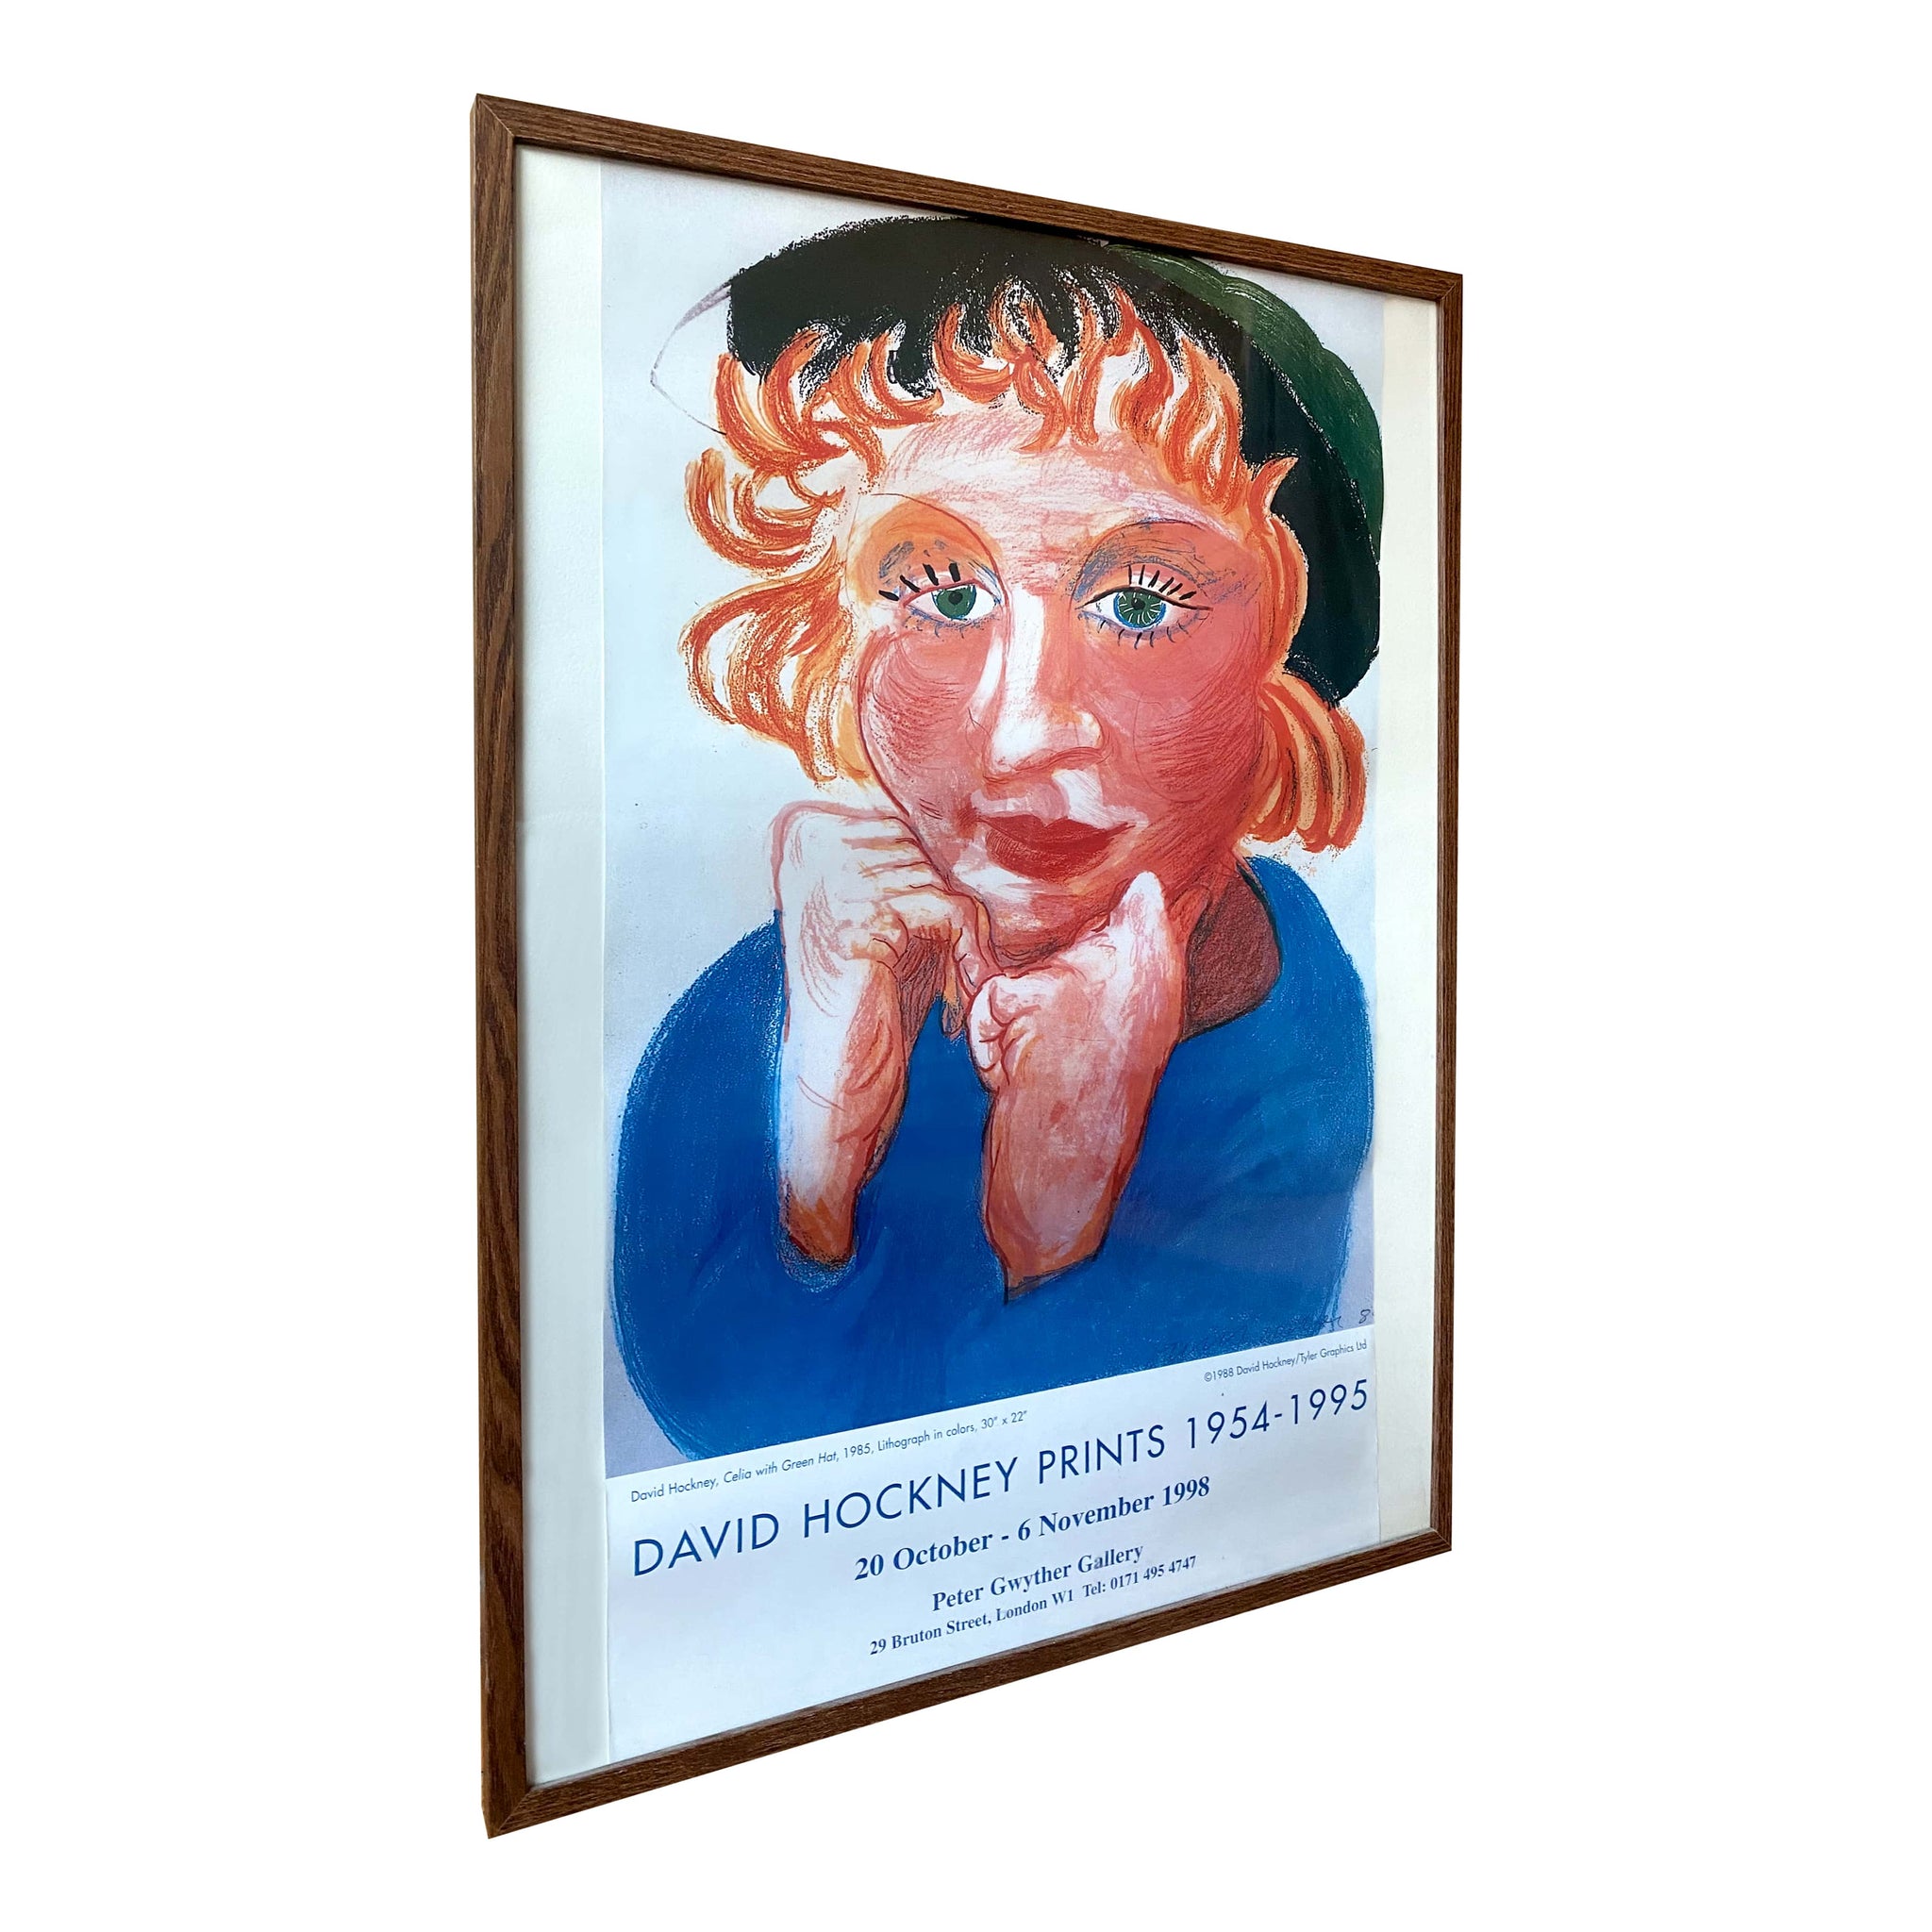 1998 David Hockney Prints 1954 - 1995 Exhibition Poster